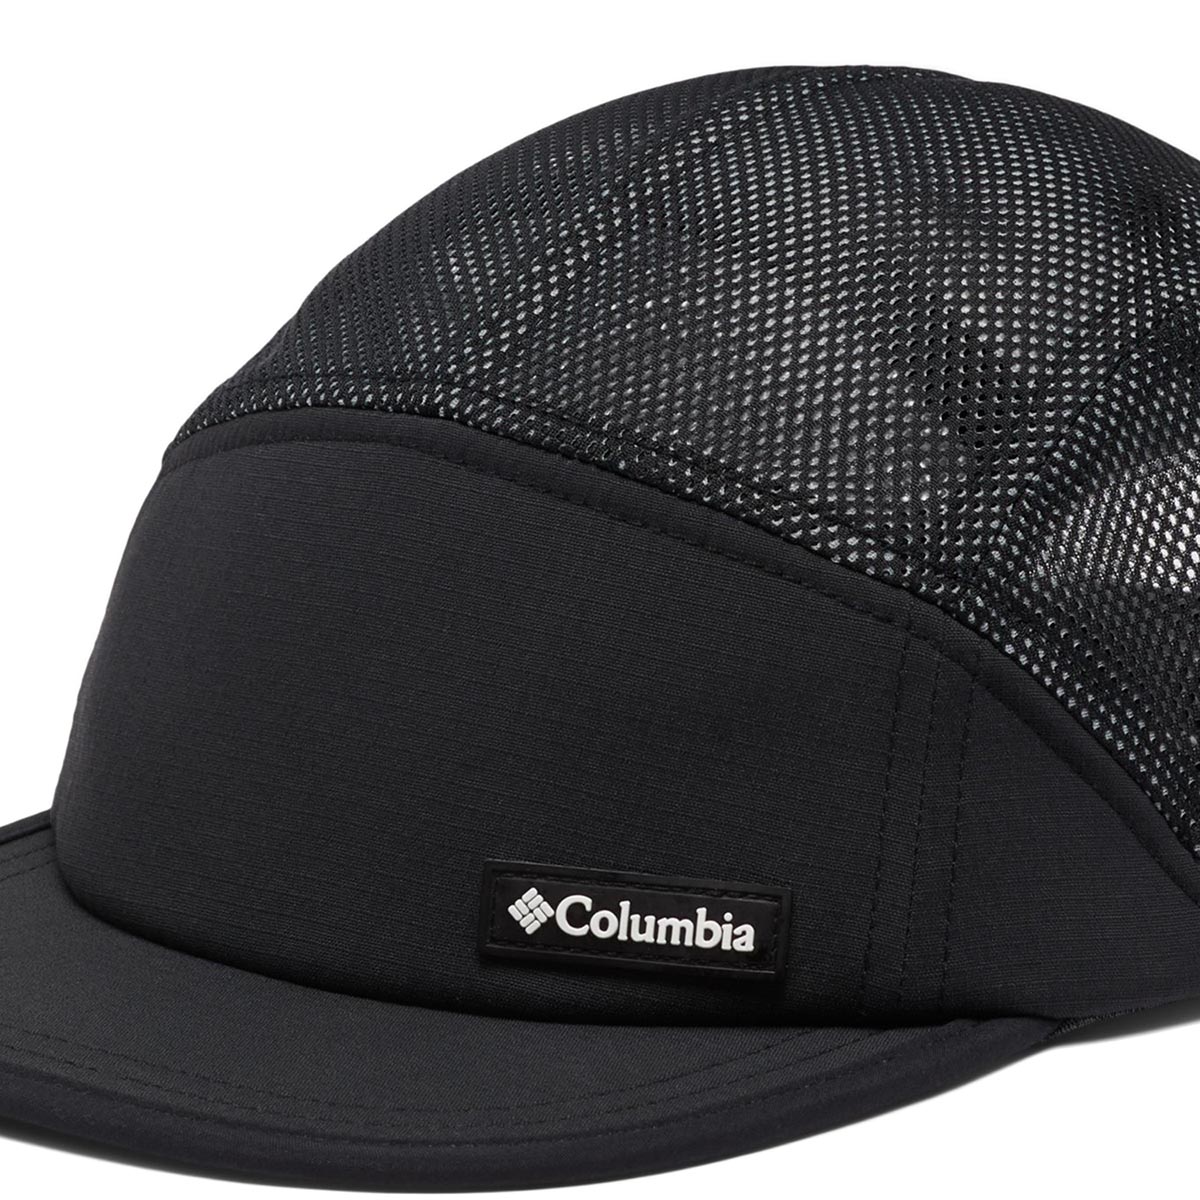 COLUMBIA - STASHCAP MESH HAT